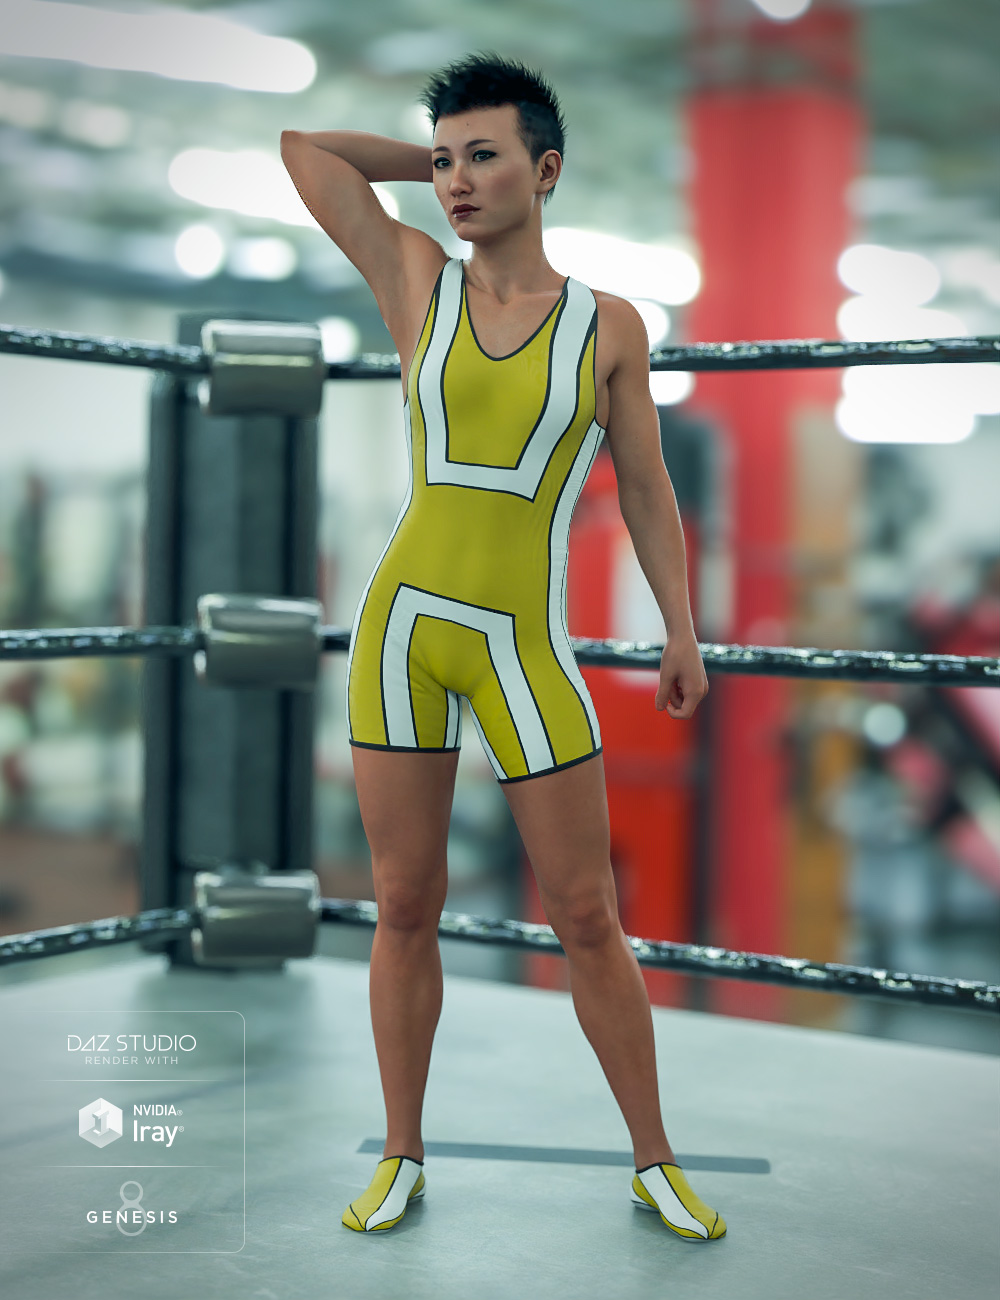 Amateur Wrestler Outfit Textures by: Sixus1 Media, 3D Models by Daz 3D